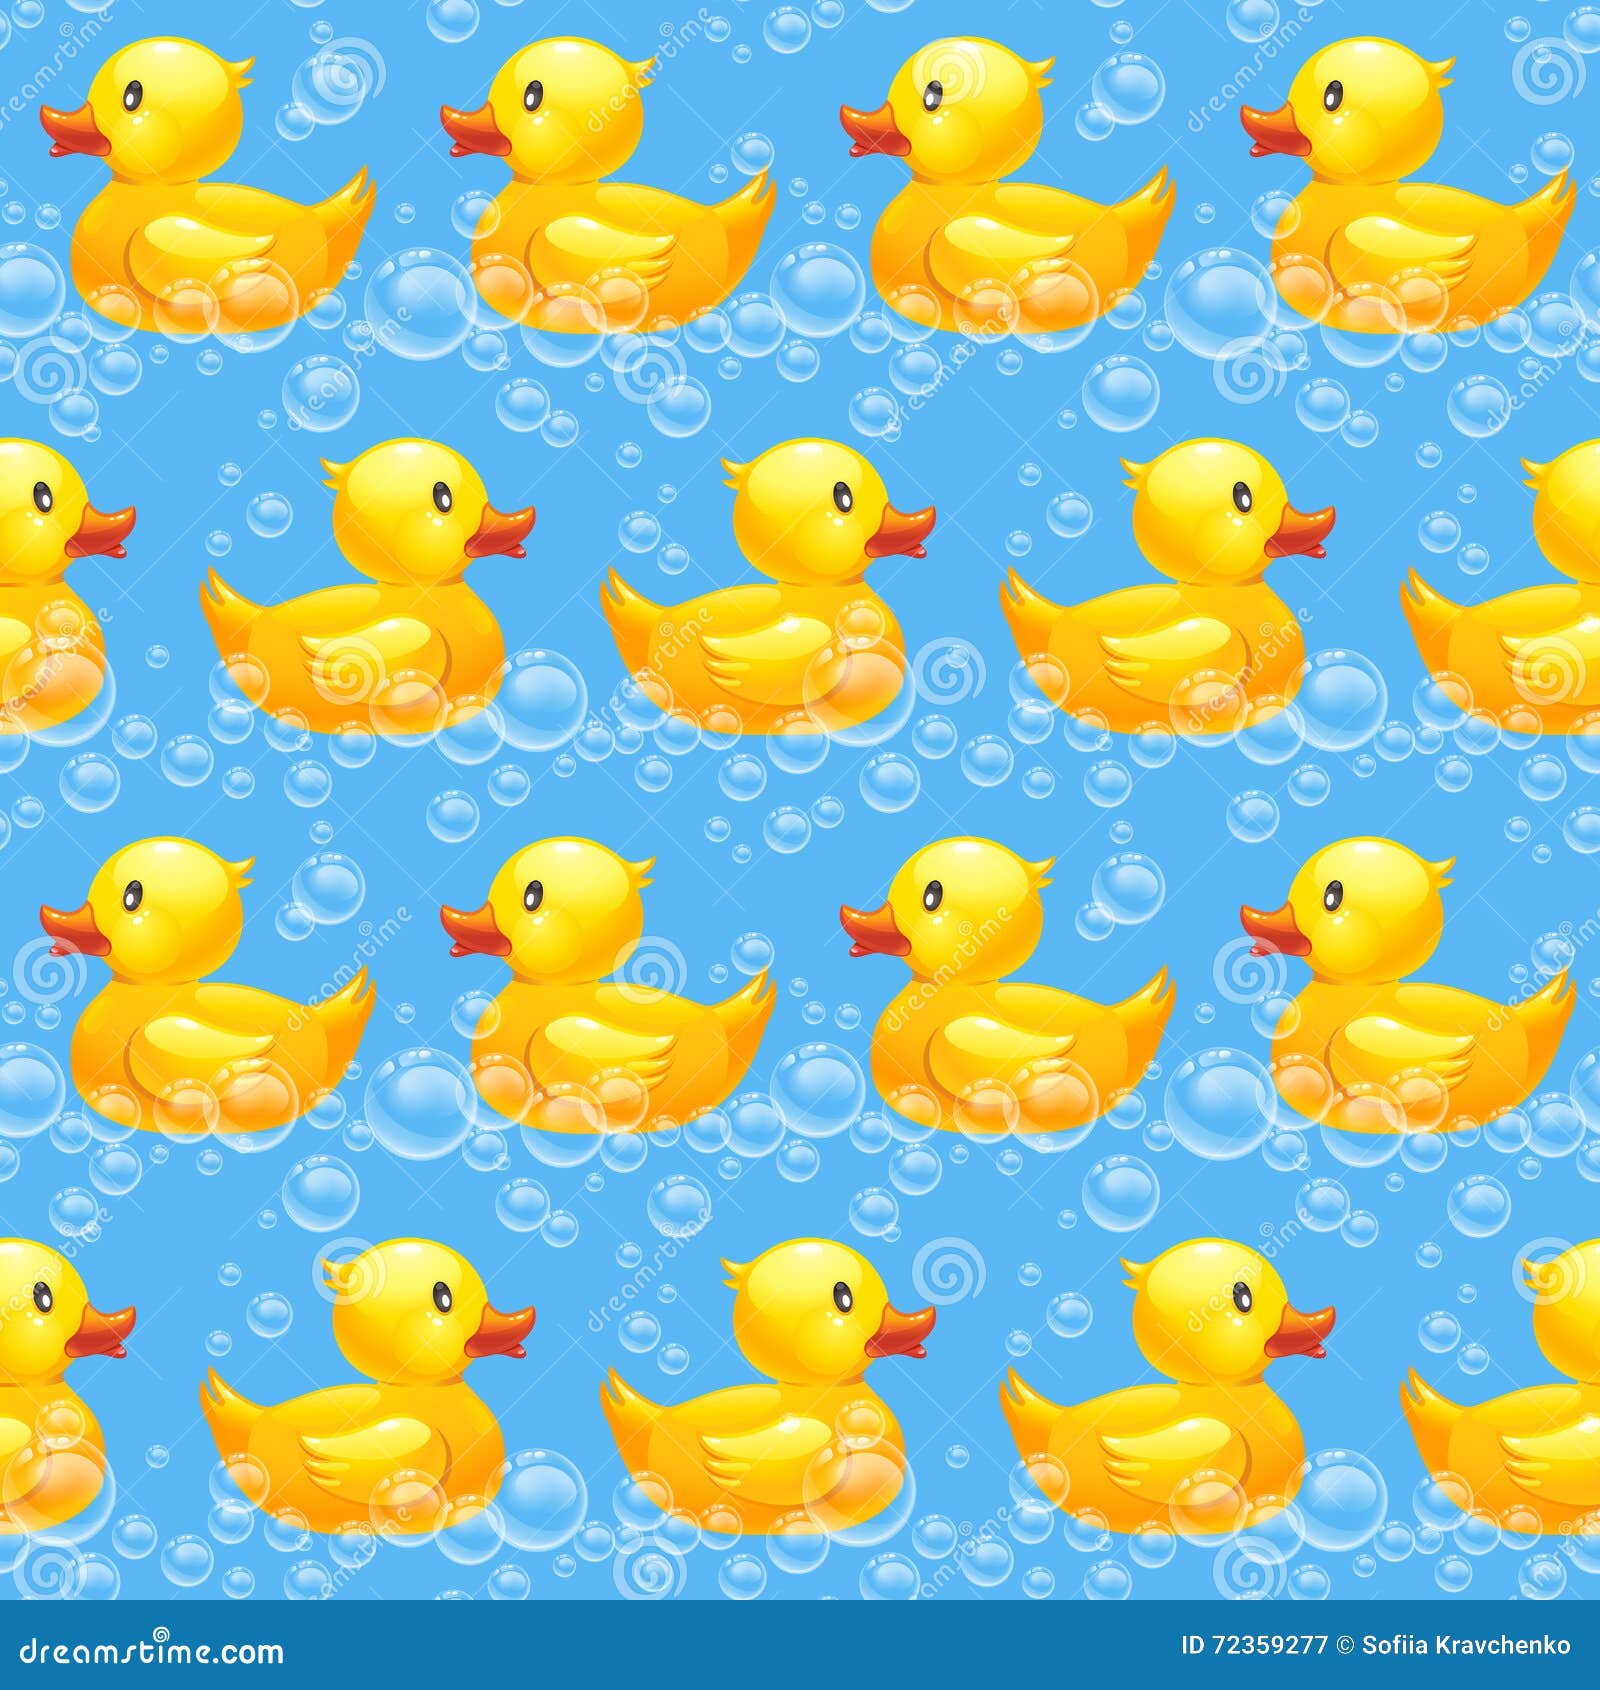 HD wallpaper duck toy pool yellow cute rubber rubber duck water  representation  Wallpaper Flare